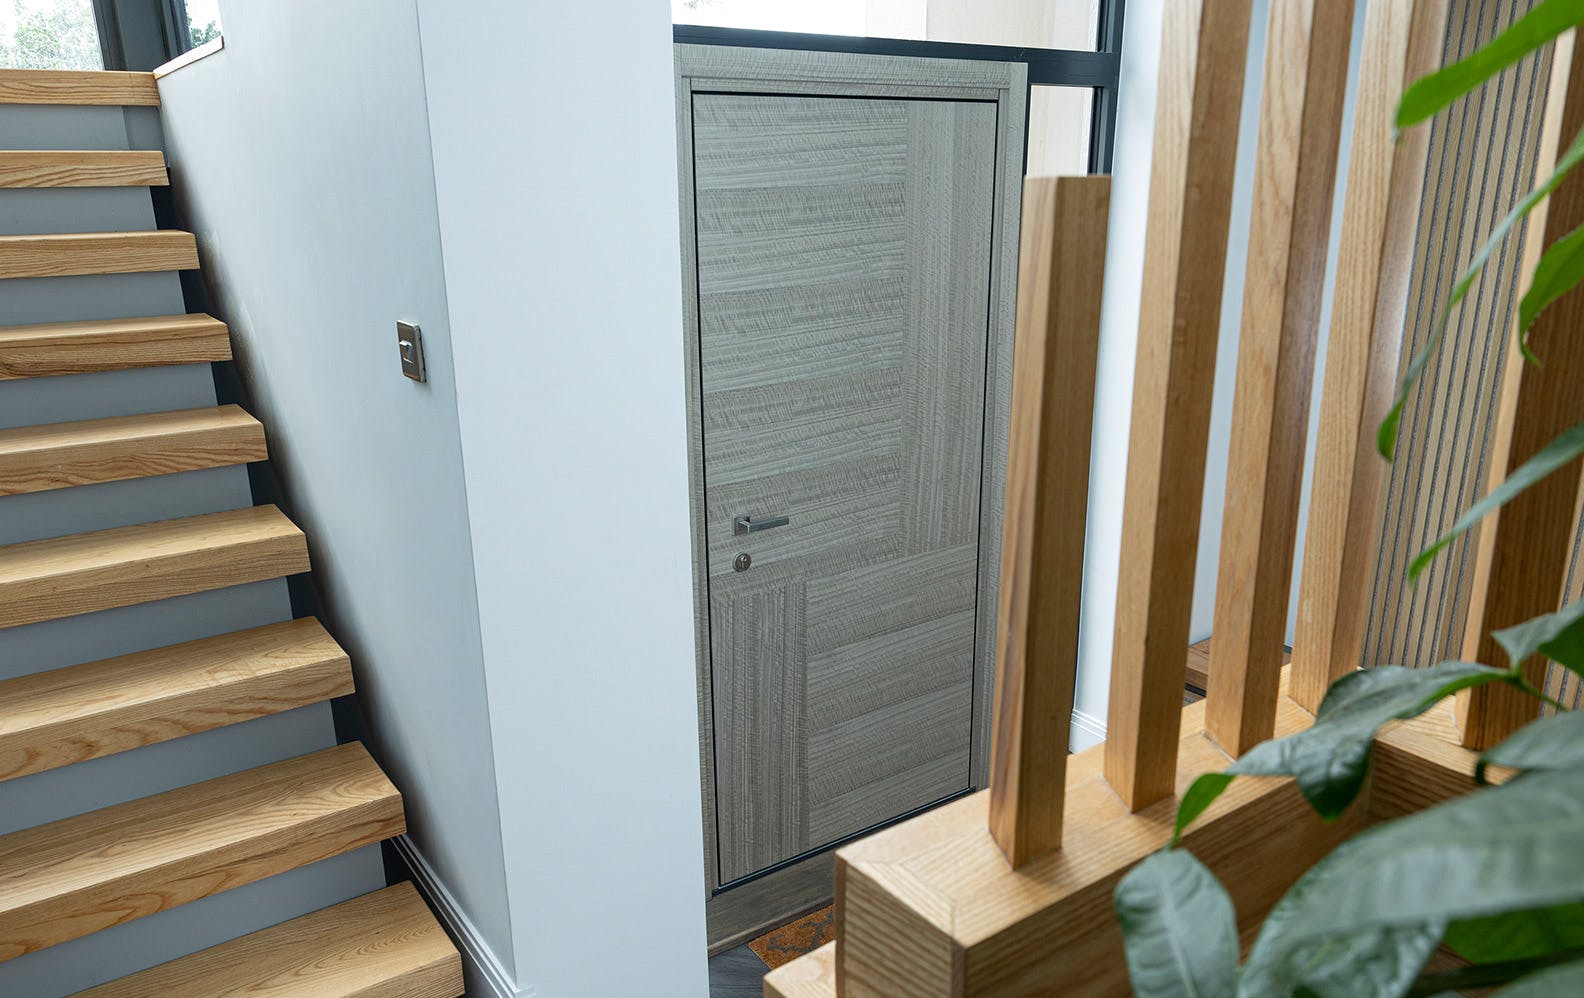 A contemporary internal door by Deuren - Vario 4 style, Eucalyptus (grey grain) finish with chrome lever handle. Set in a contemporary hallway